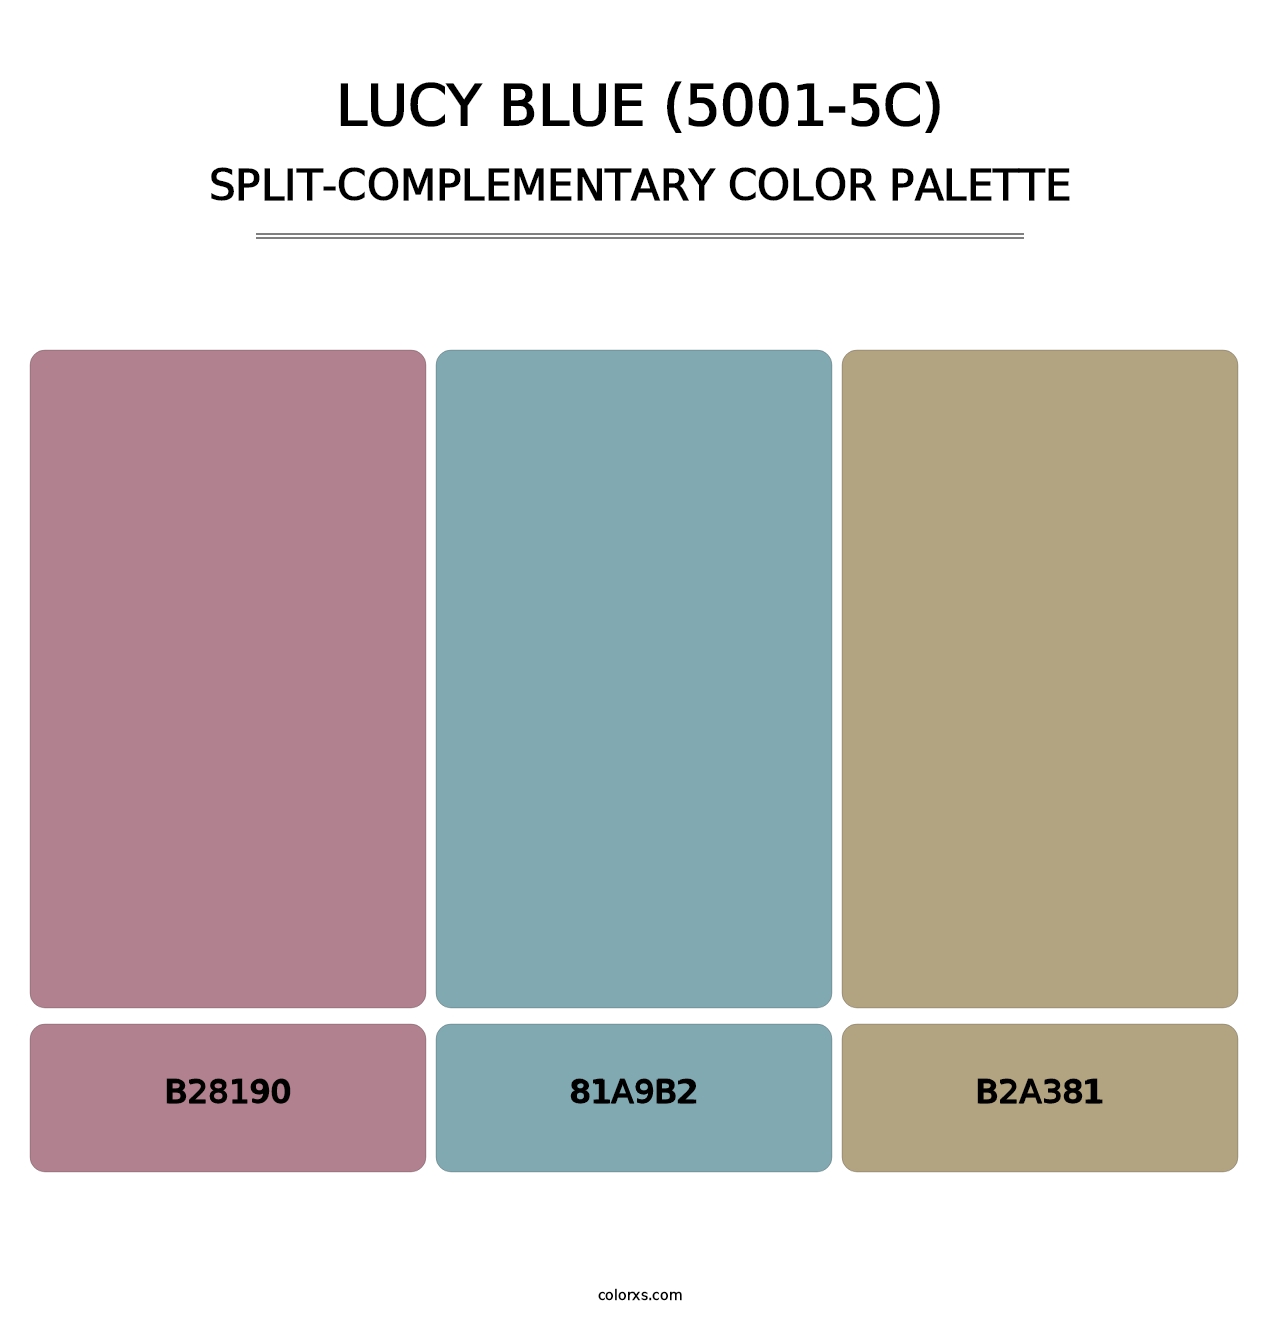 Lucy Blue (5001-5C) - Split-Complementary Color Palette